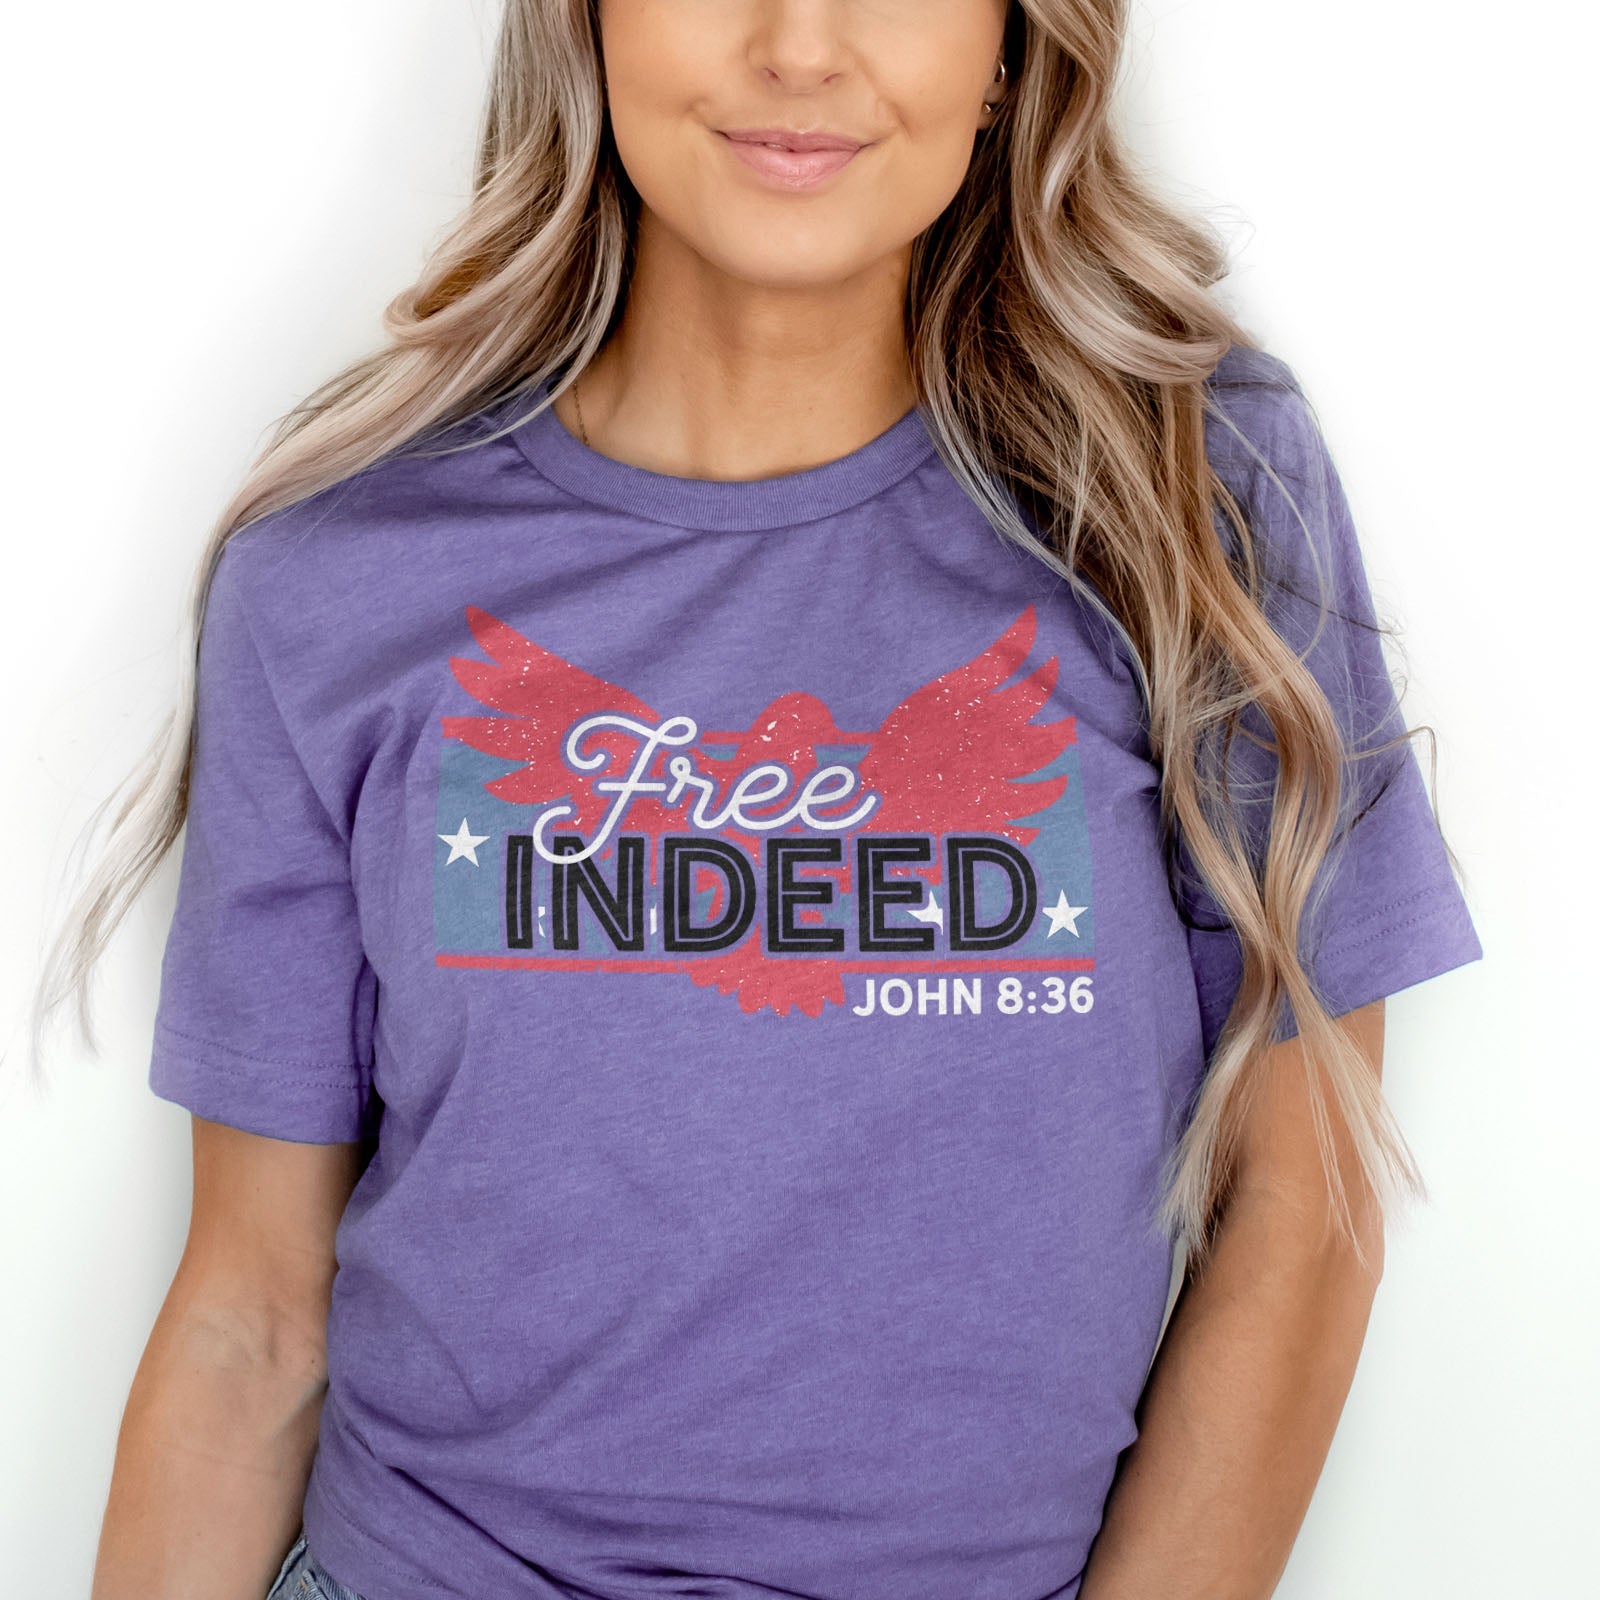 Free Indeed John 8:36 Tee Shirts For Women - Christian Shirts for Women - Religious Tee Shirts